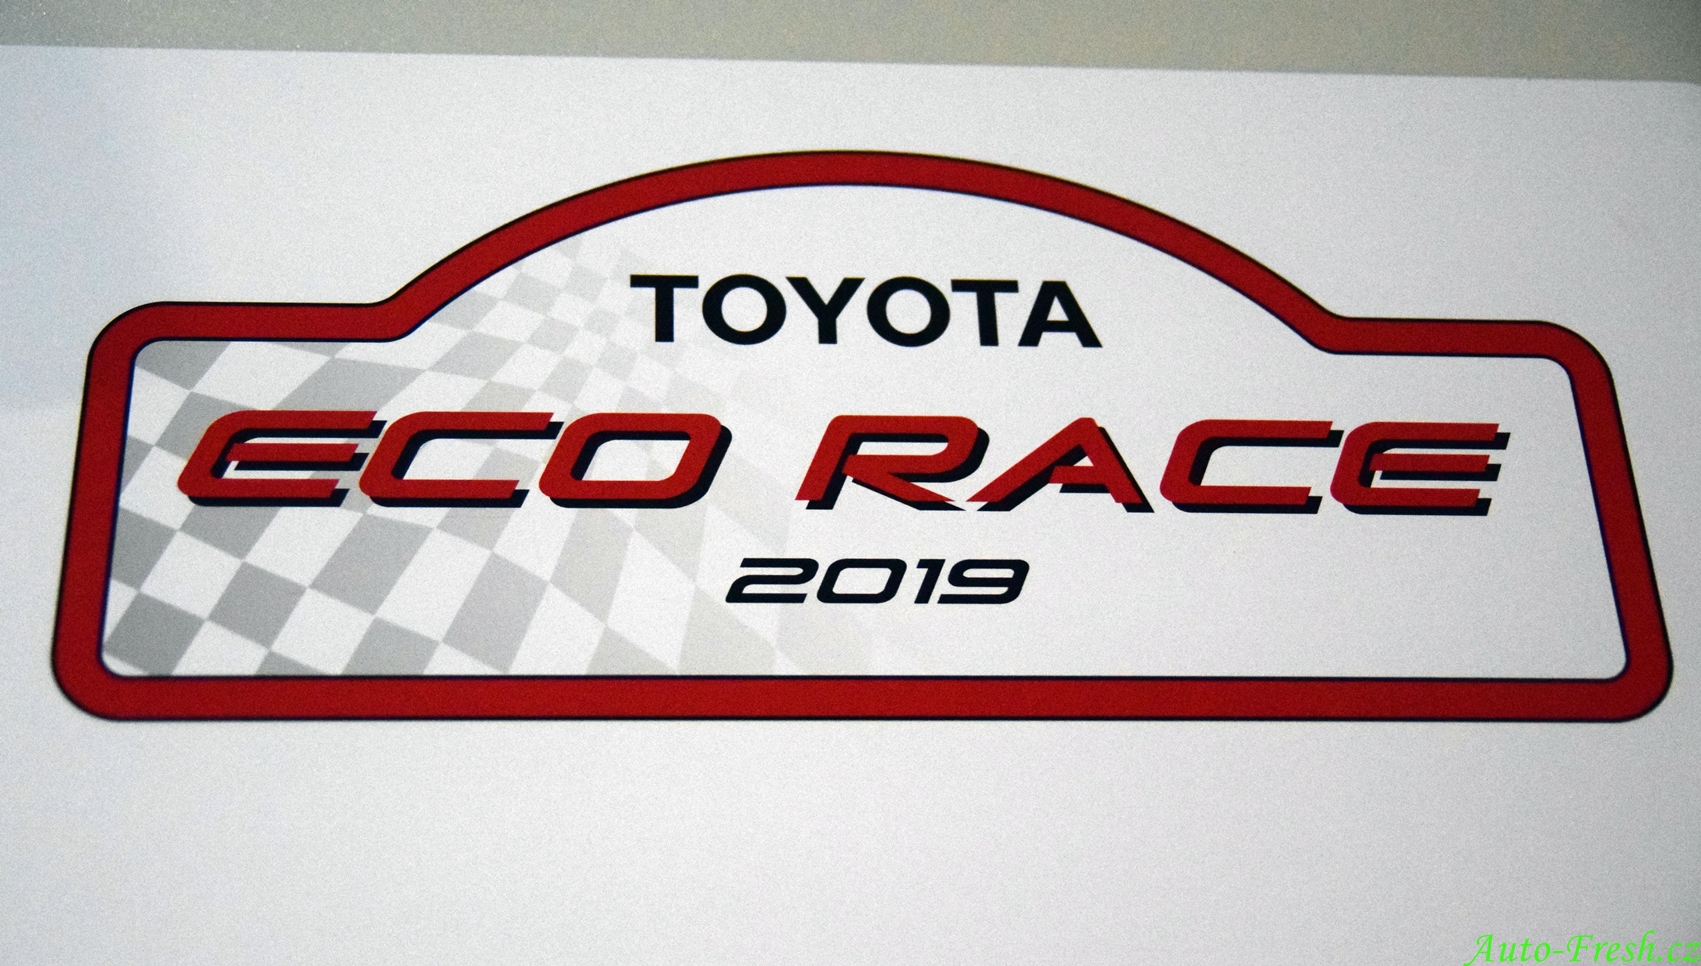 Toyota Eco race logo